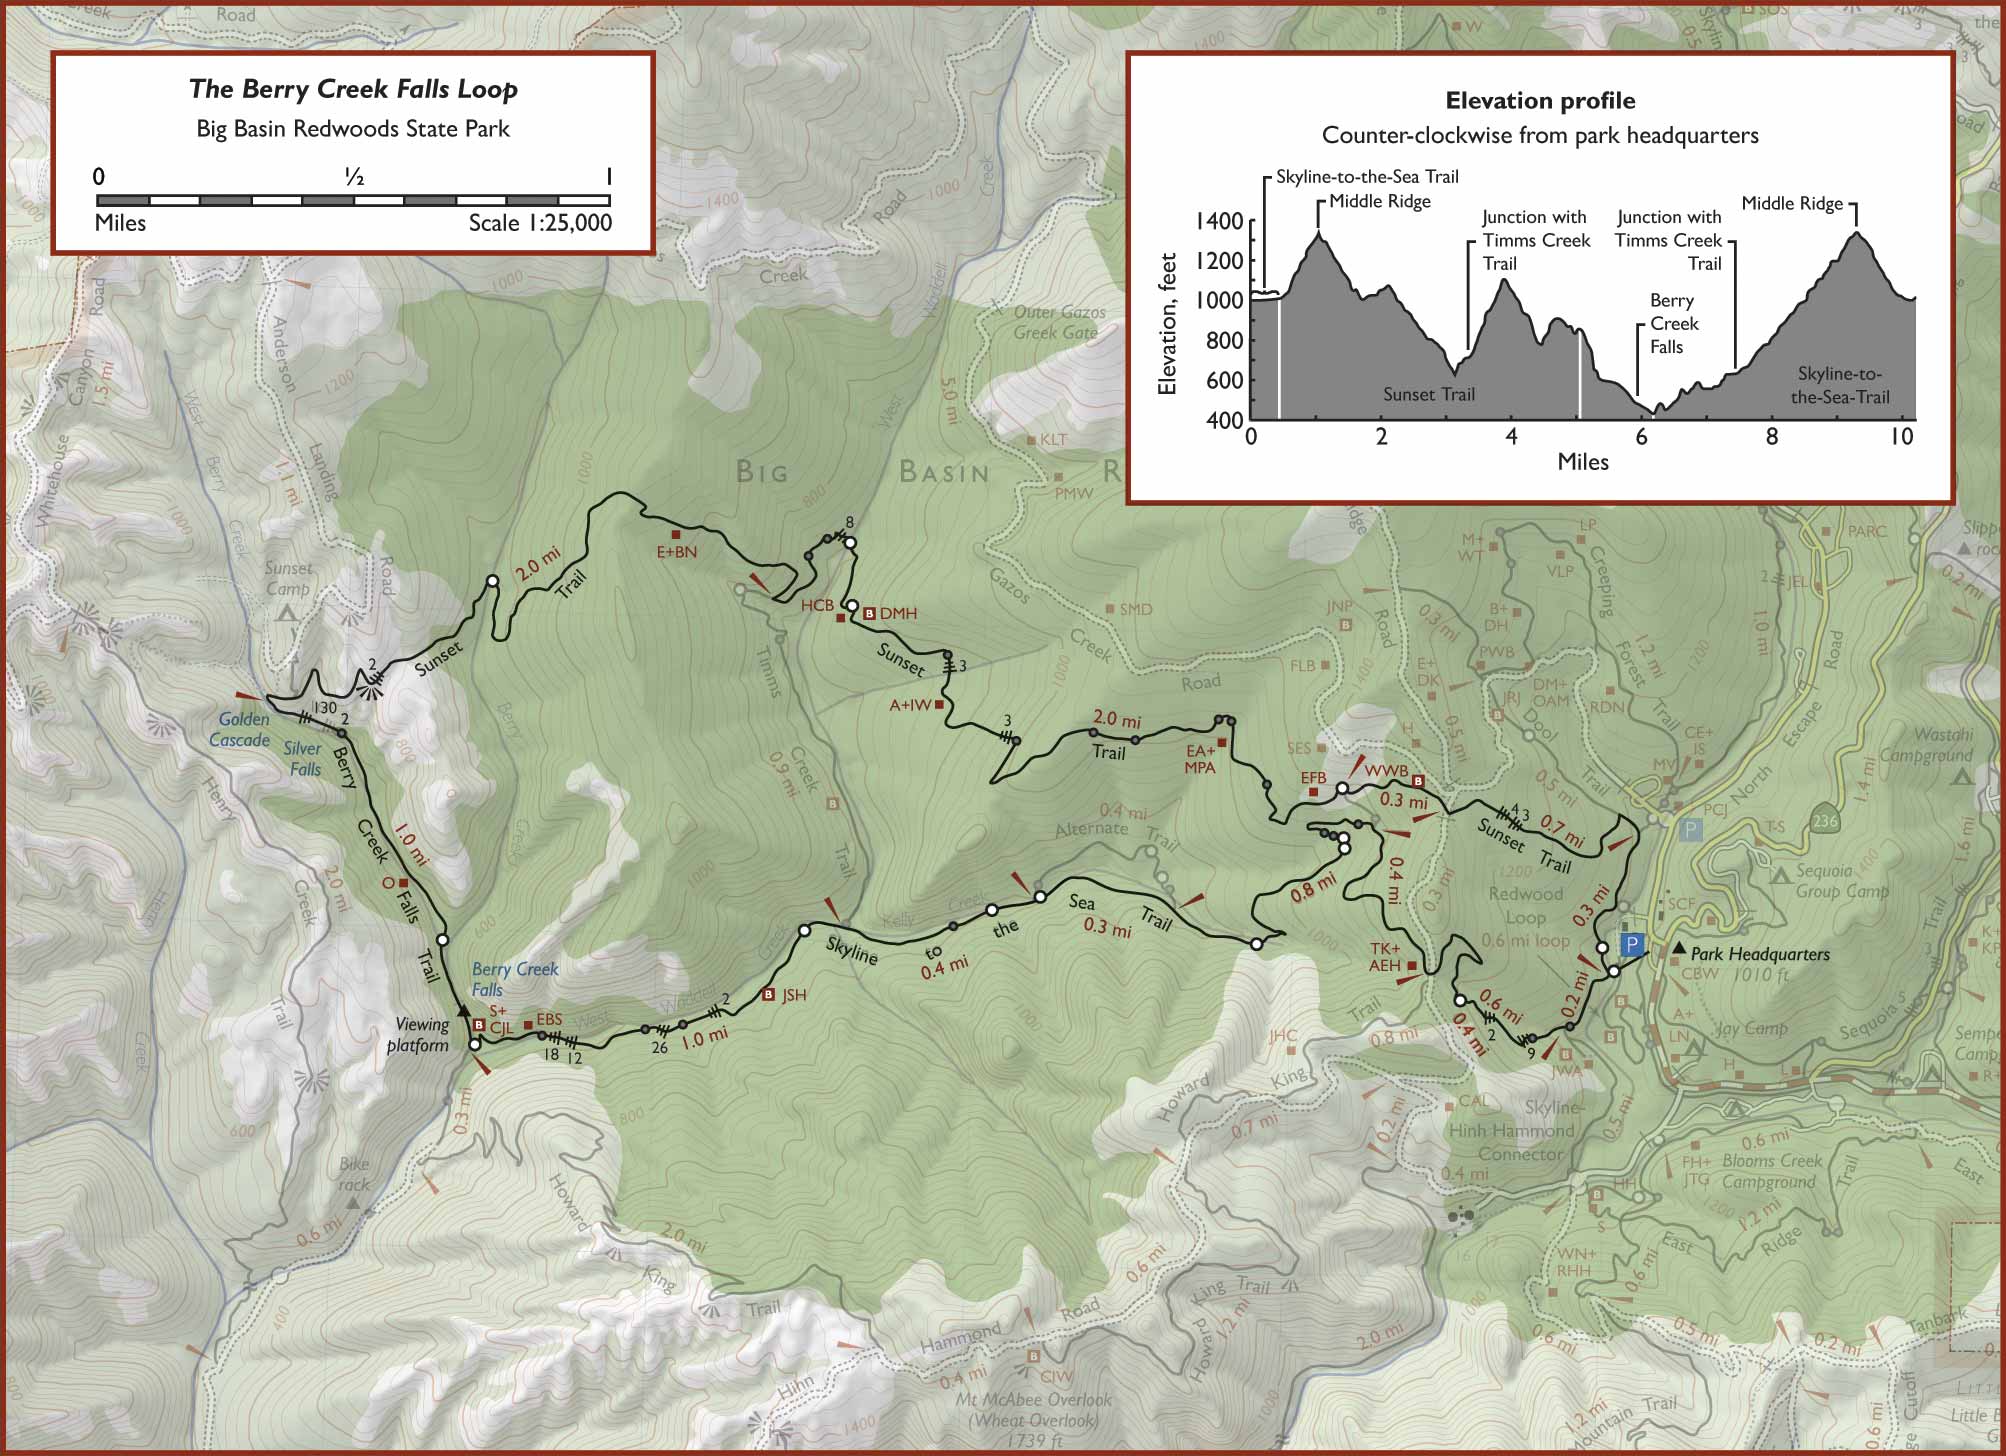 Topografisk kort over Berry Creek Loop, Big Basin Redwoods State Park